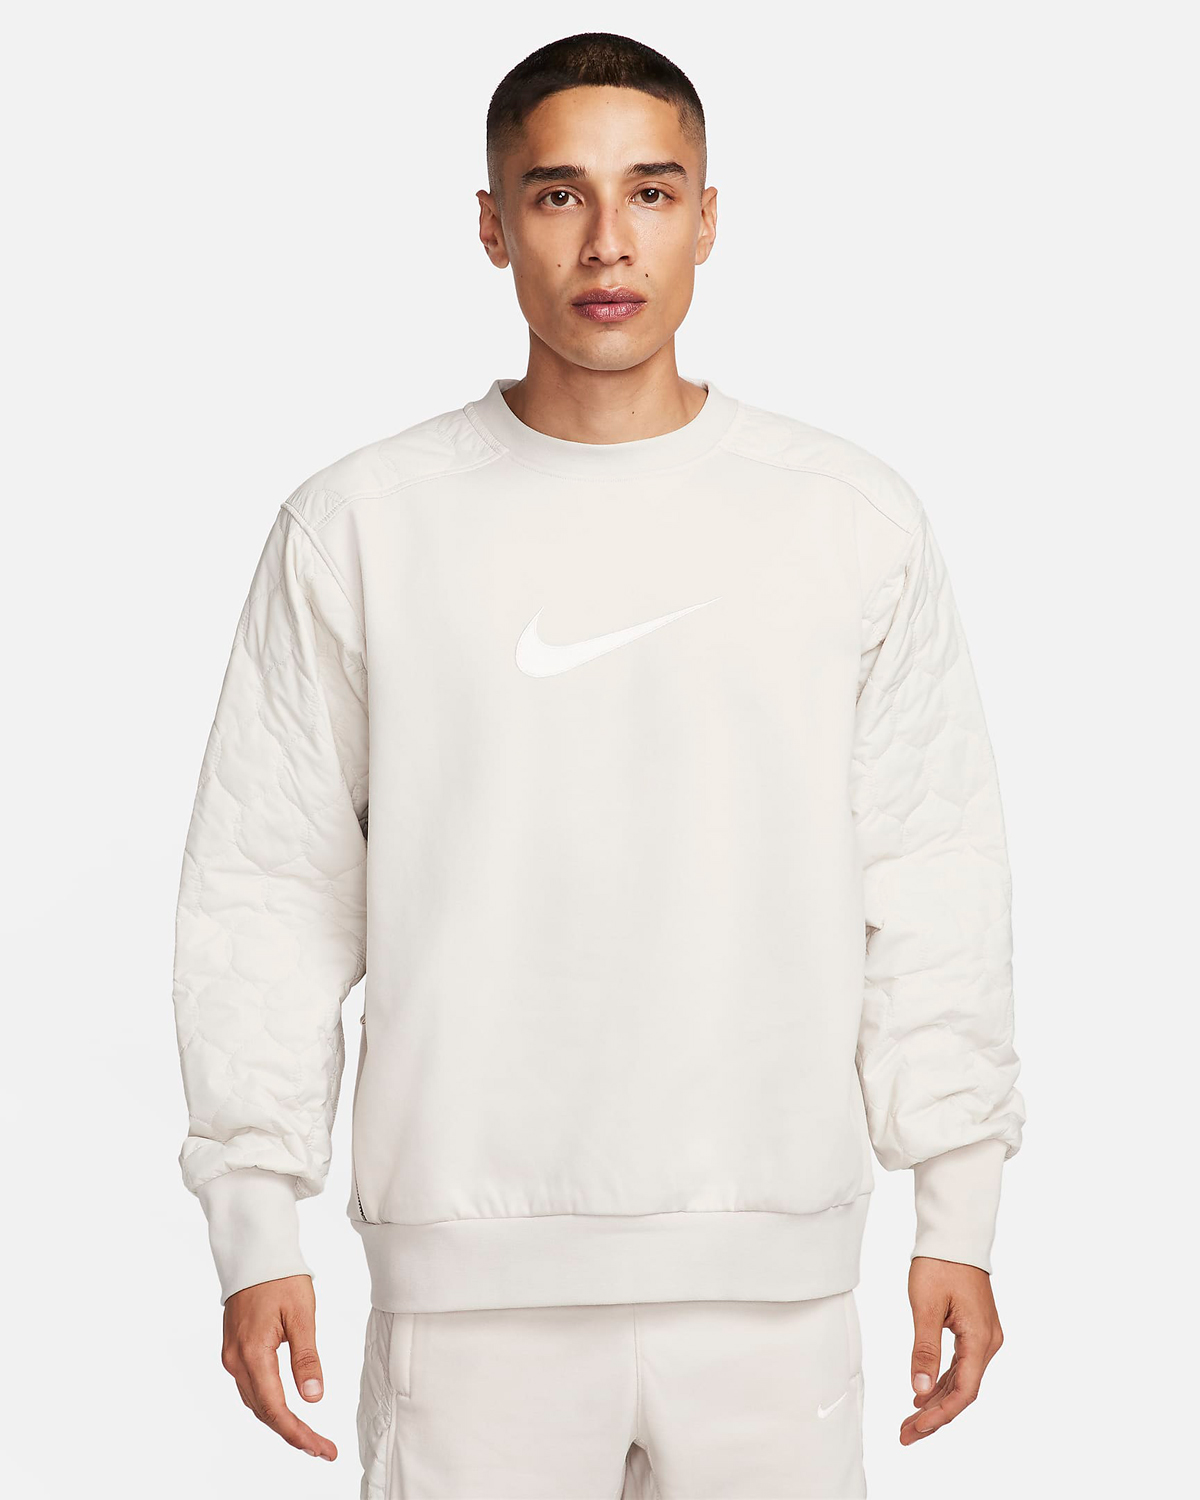 Nike-Standard-Issue-Basketball-Sweatshirt-Light-Orewood-Brown-1